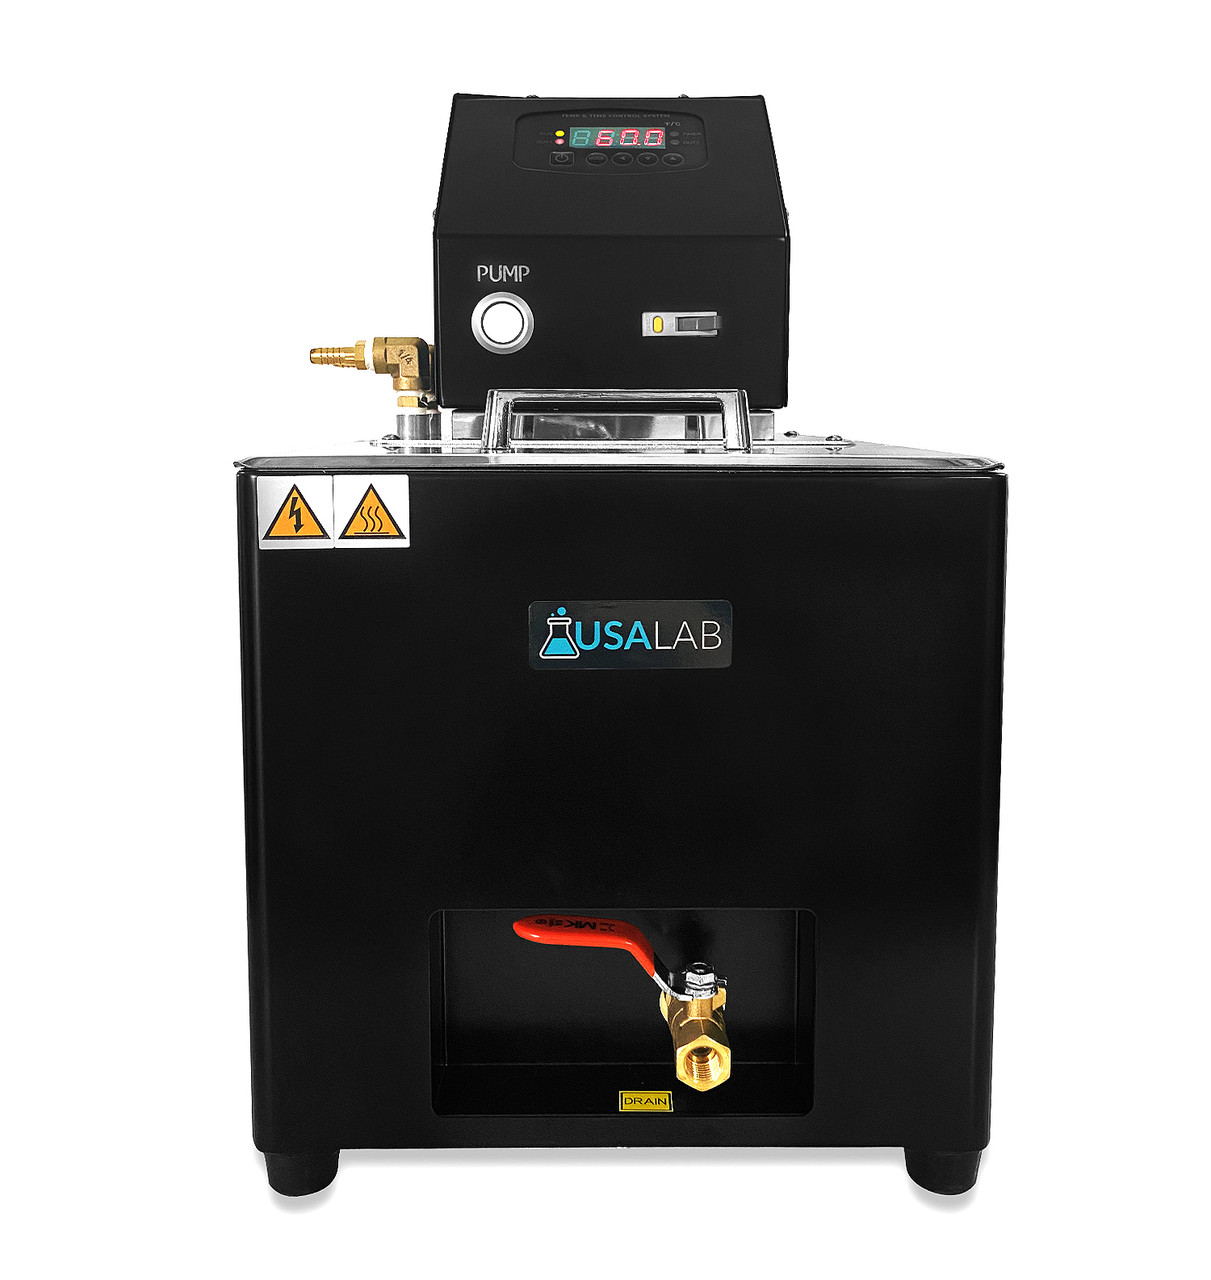 Realyc Heating Coaster 1 Set Universal Fit Rapid Heat-up